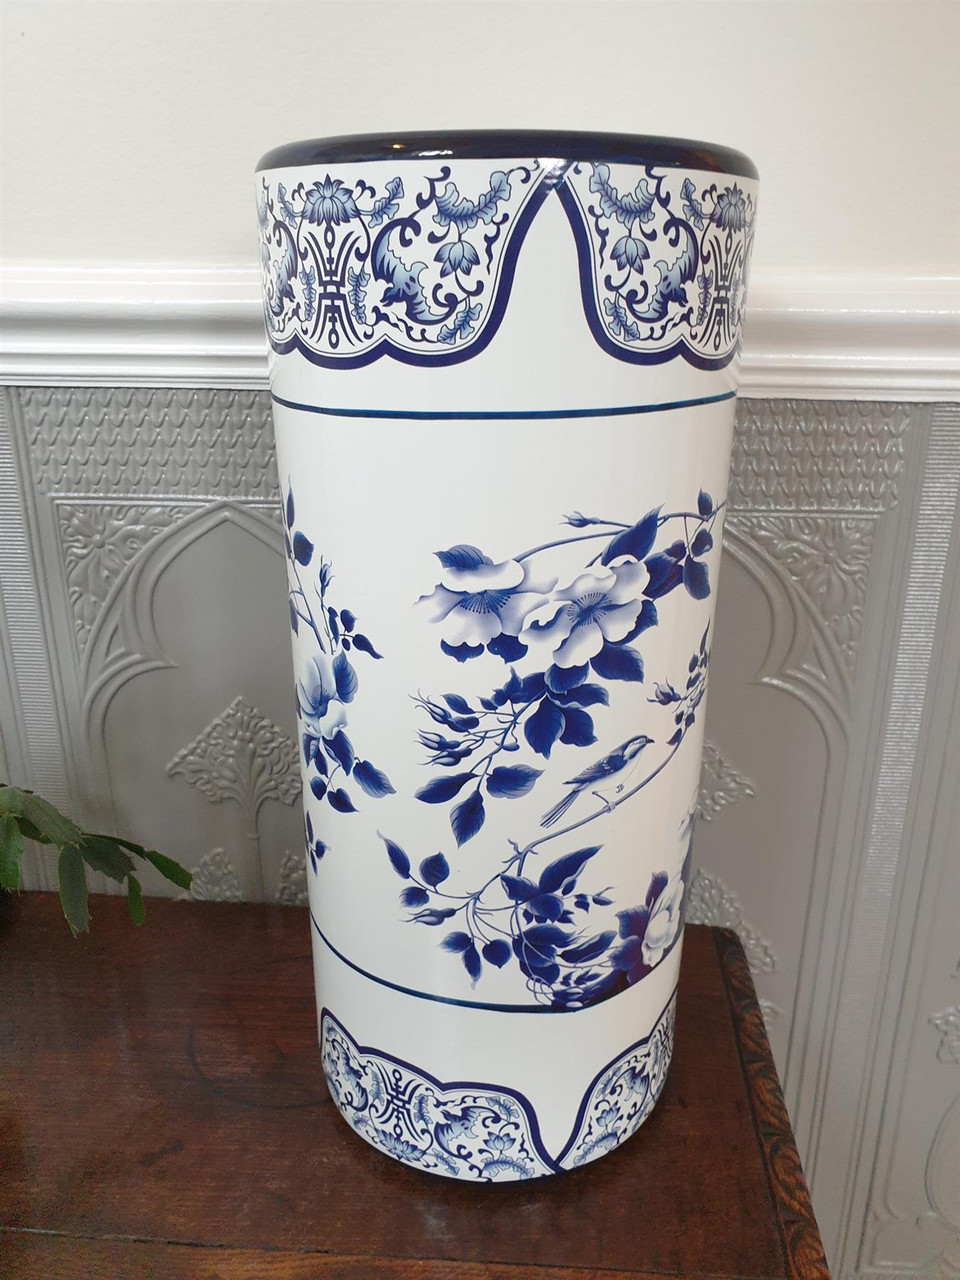 Umbrella Stand / Stick Holder - Chinese Ceramic - Rambling Rose Pattern